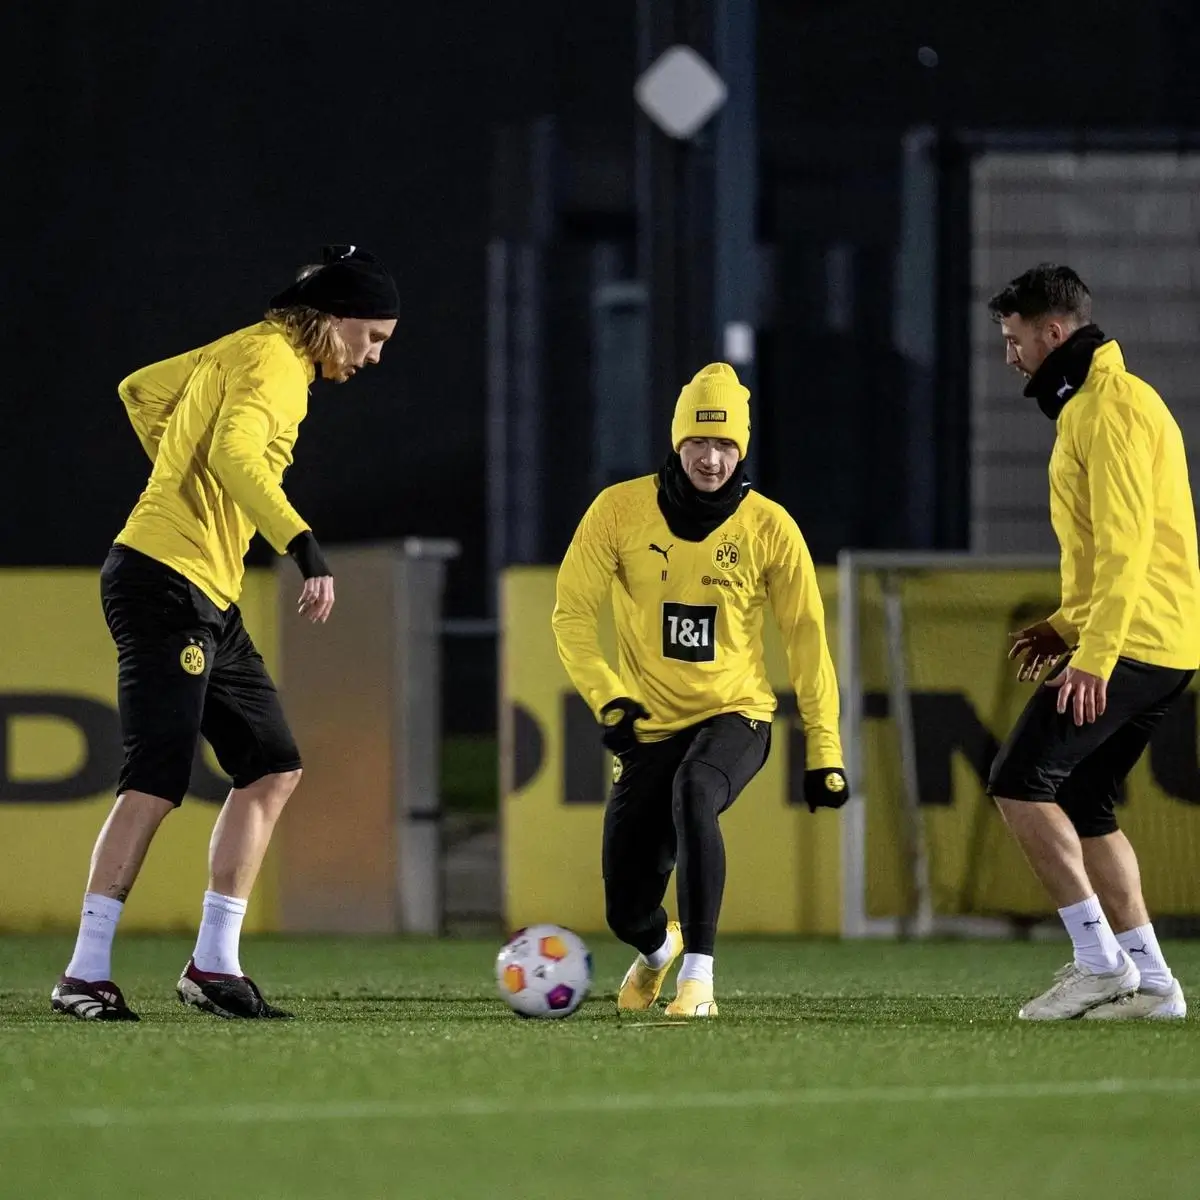 Cota 2 din fotbal 19 decembrie - Isi revine Dortmund